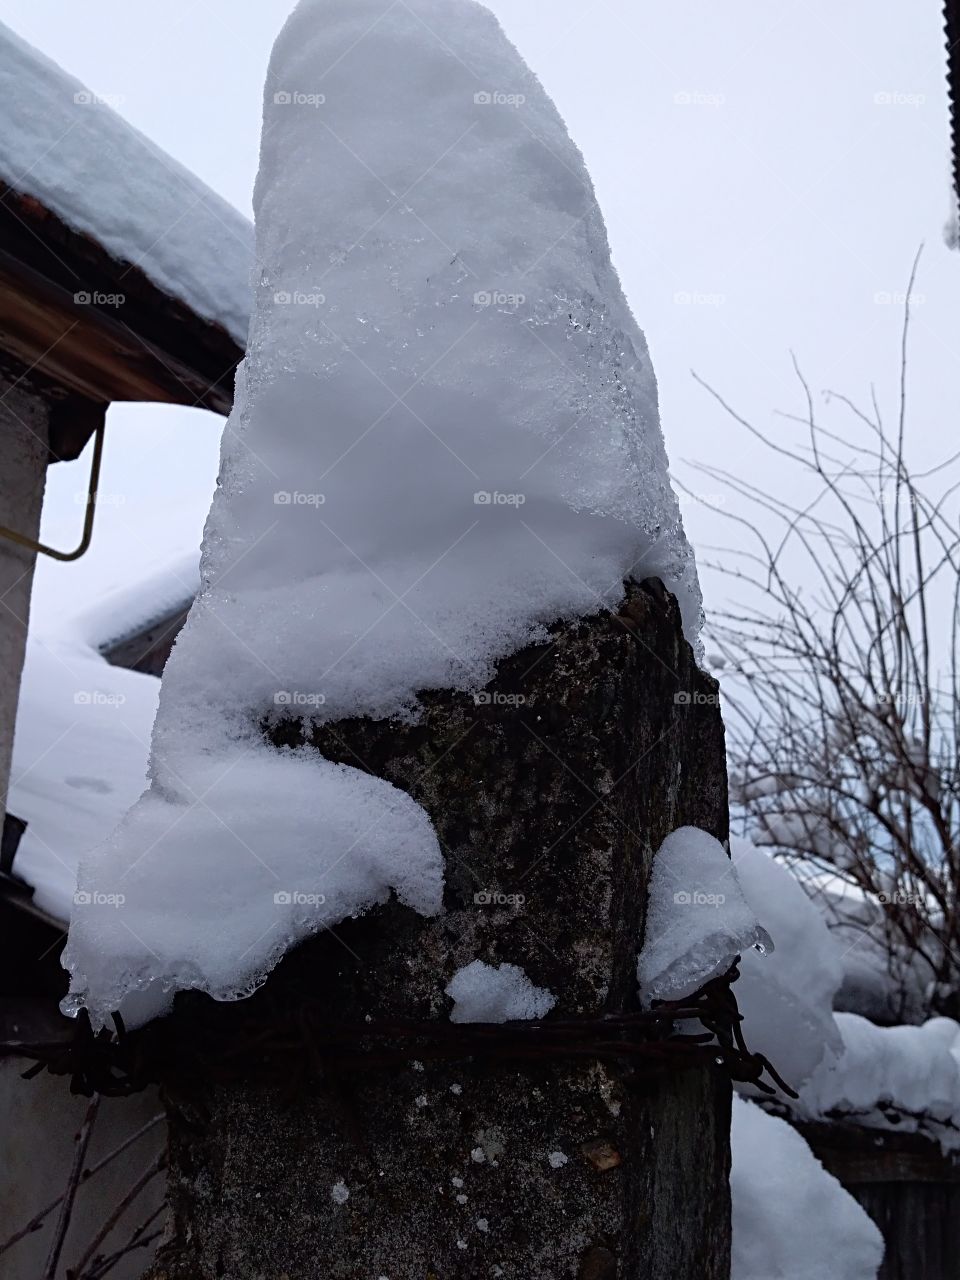 pillon under snow